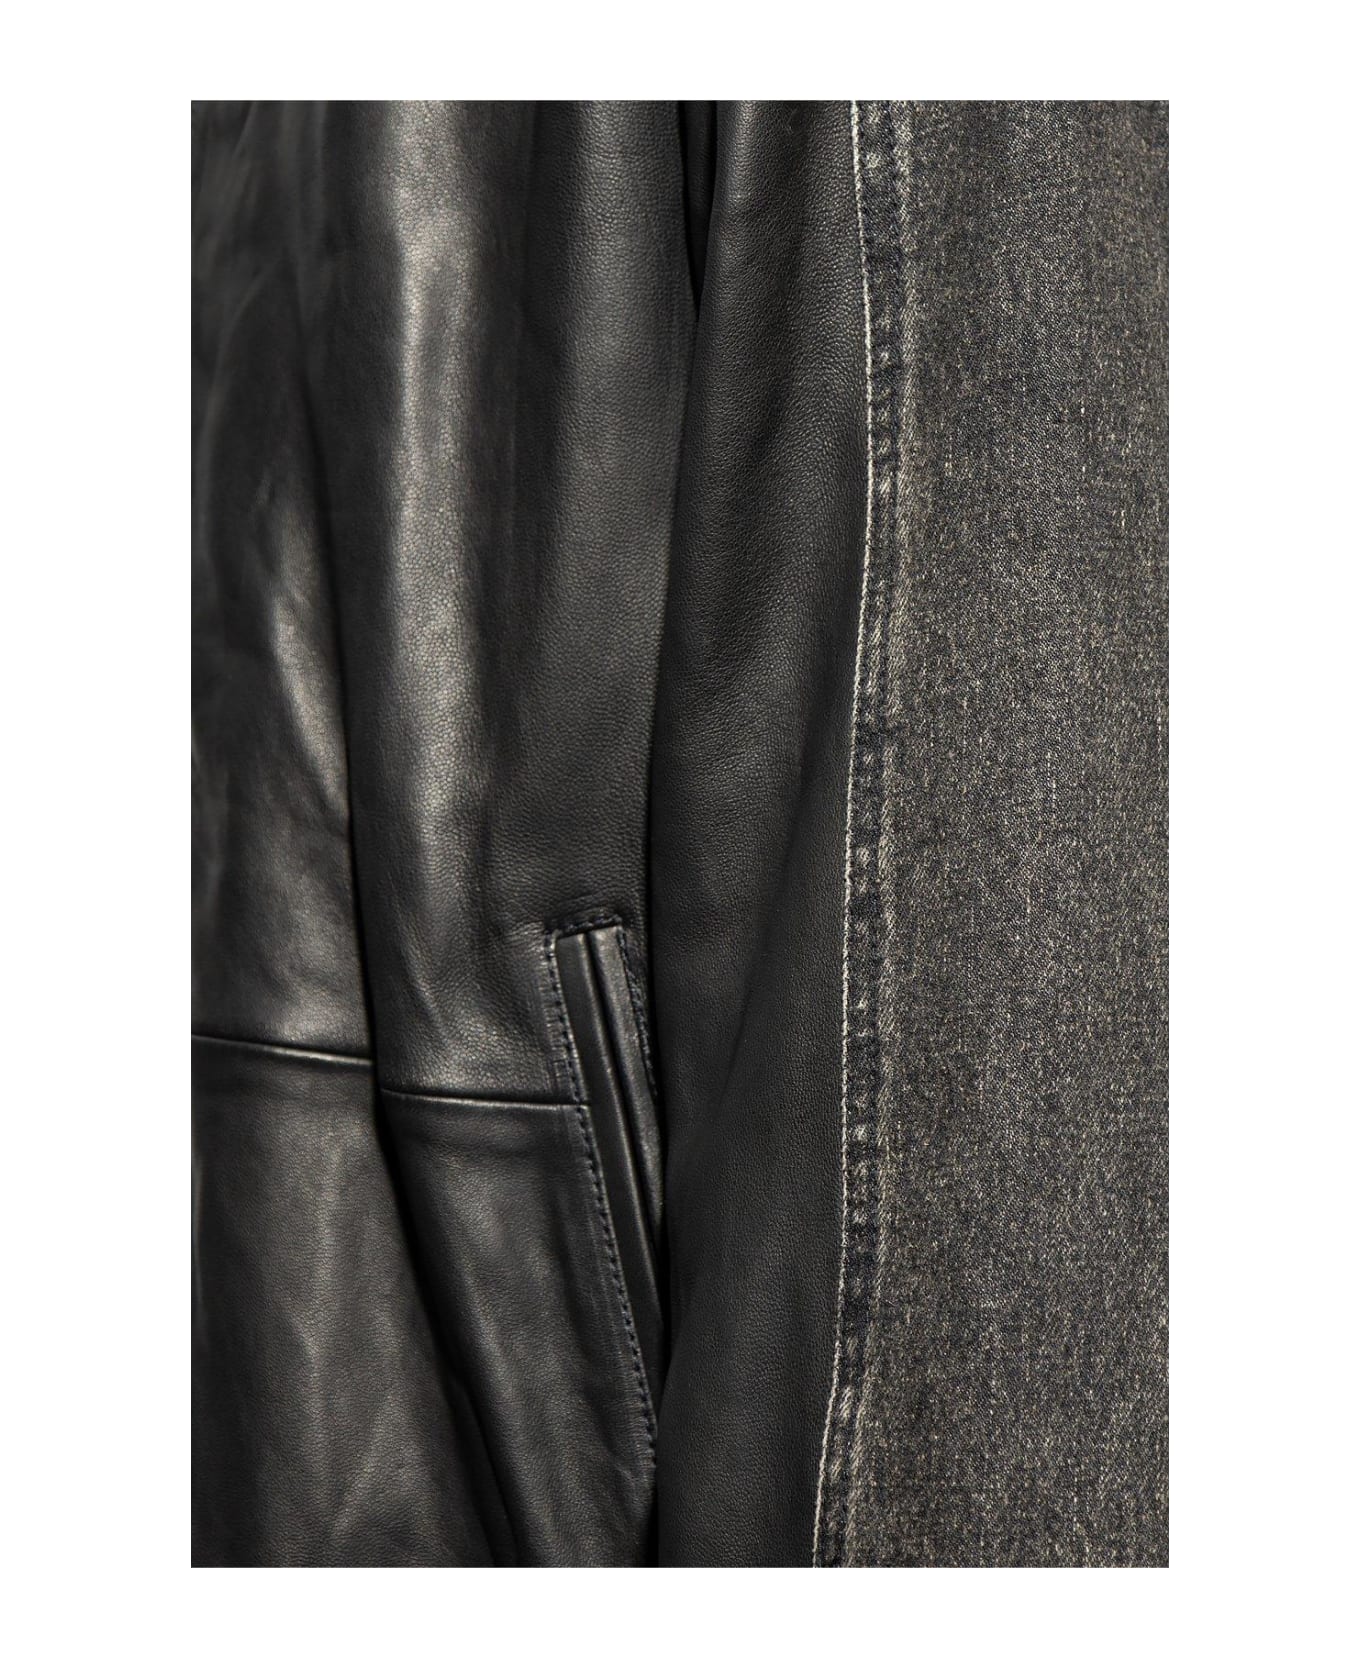 Diesel L-stoller Leather Jacket - Nero grigio レザージャケット